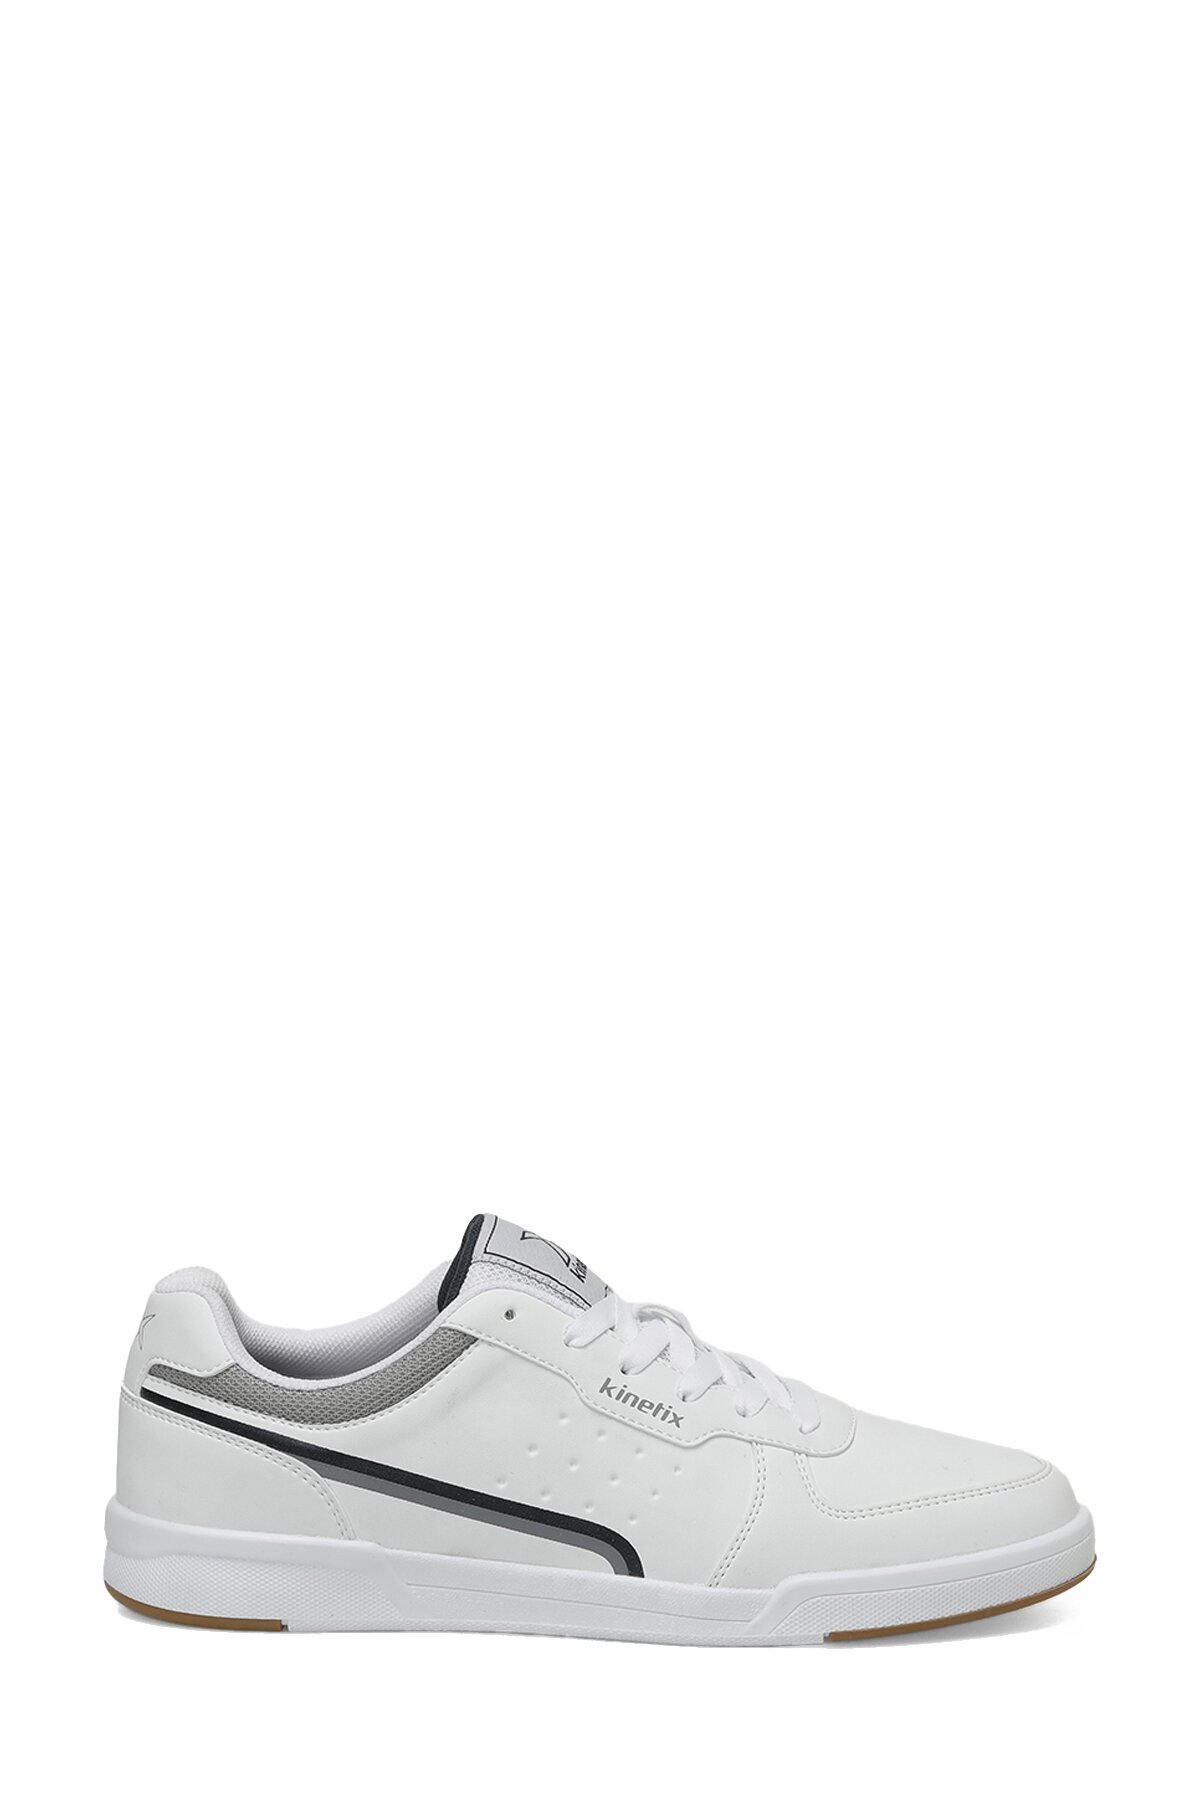 KINETIX Men's Sneakers White - Black - Gray 101492070